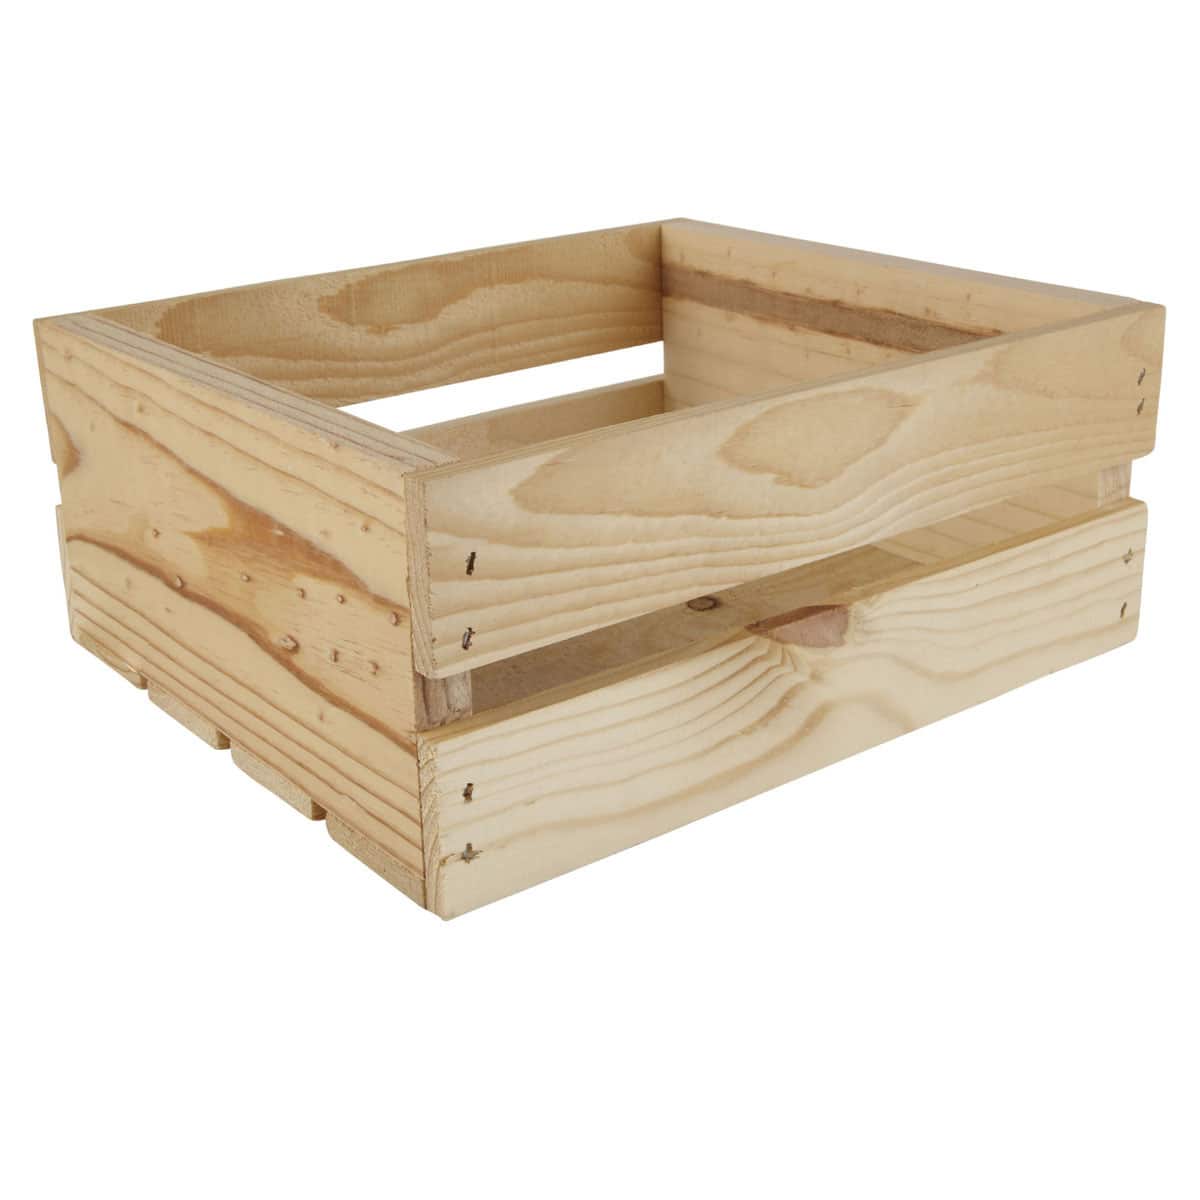 Wooden Box By Make Market®, Michaels